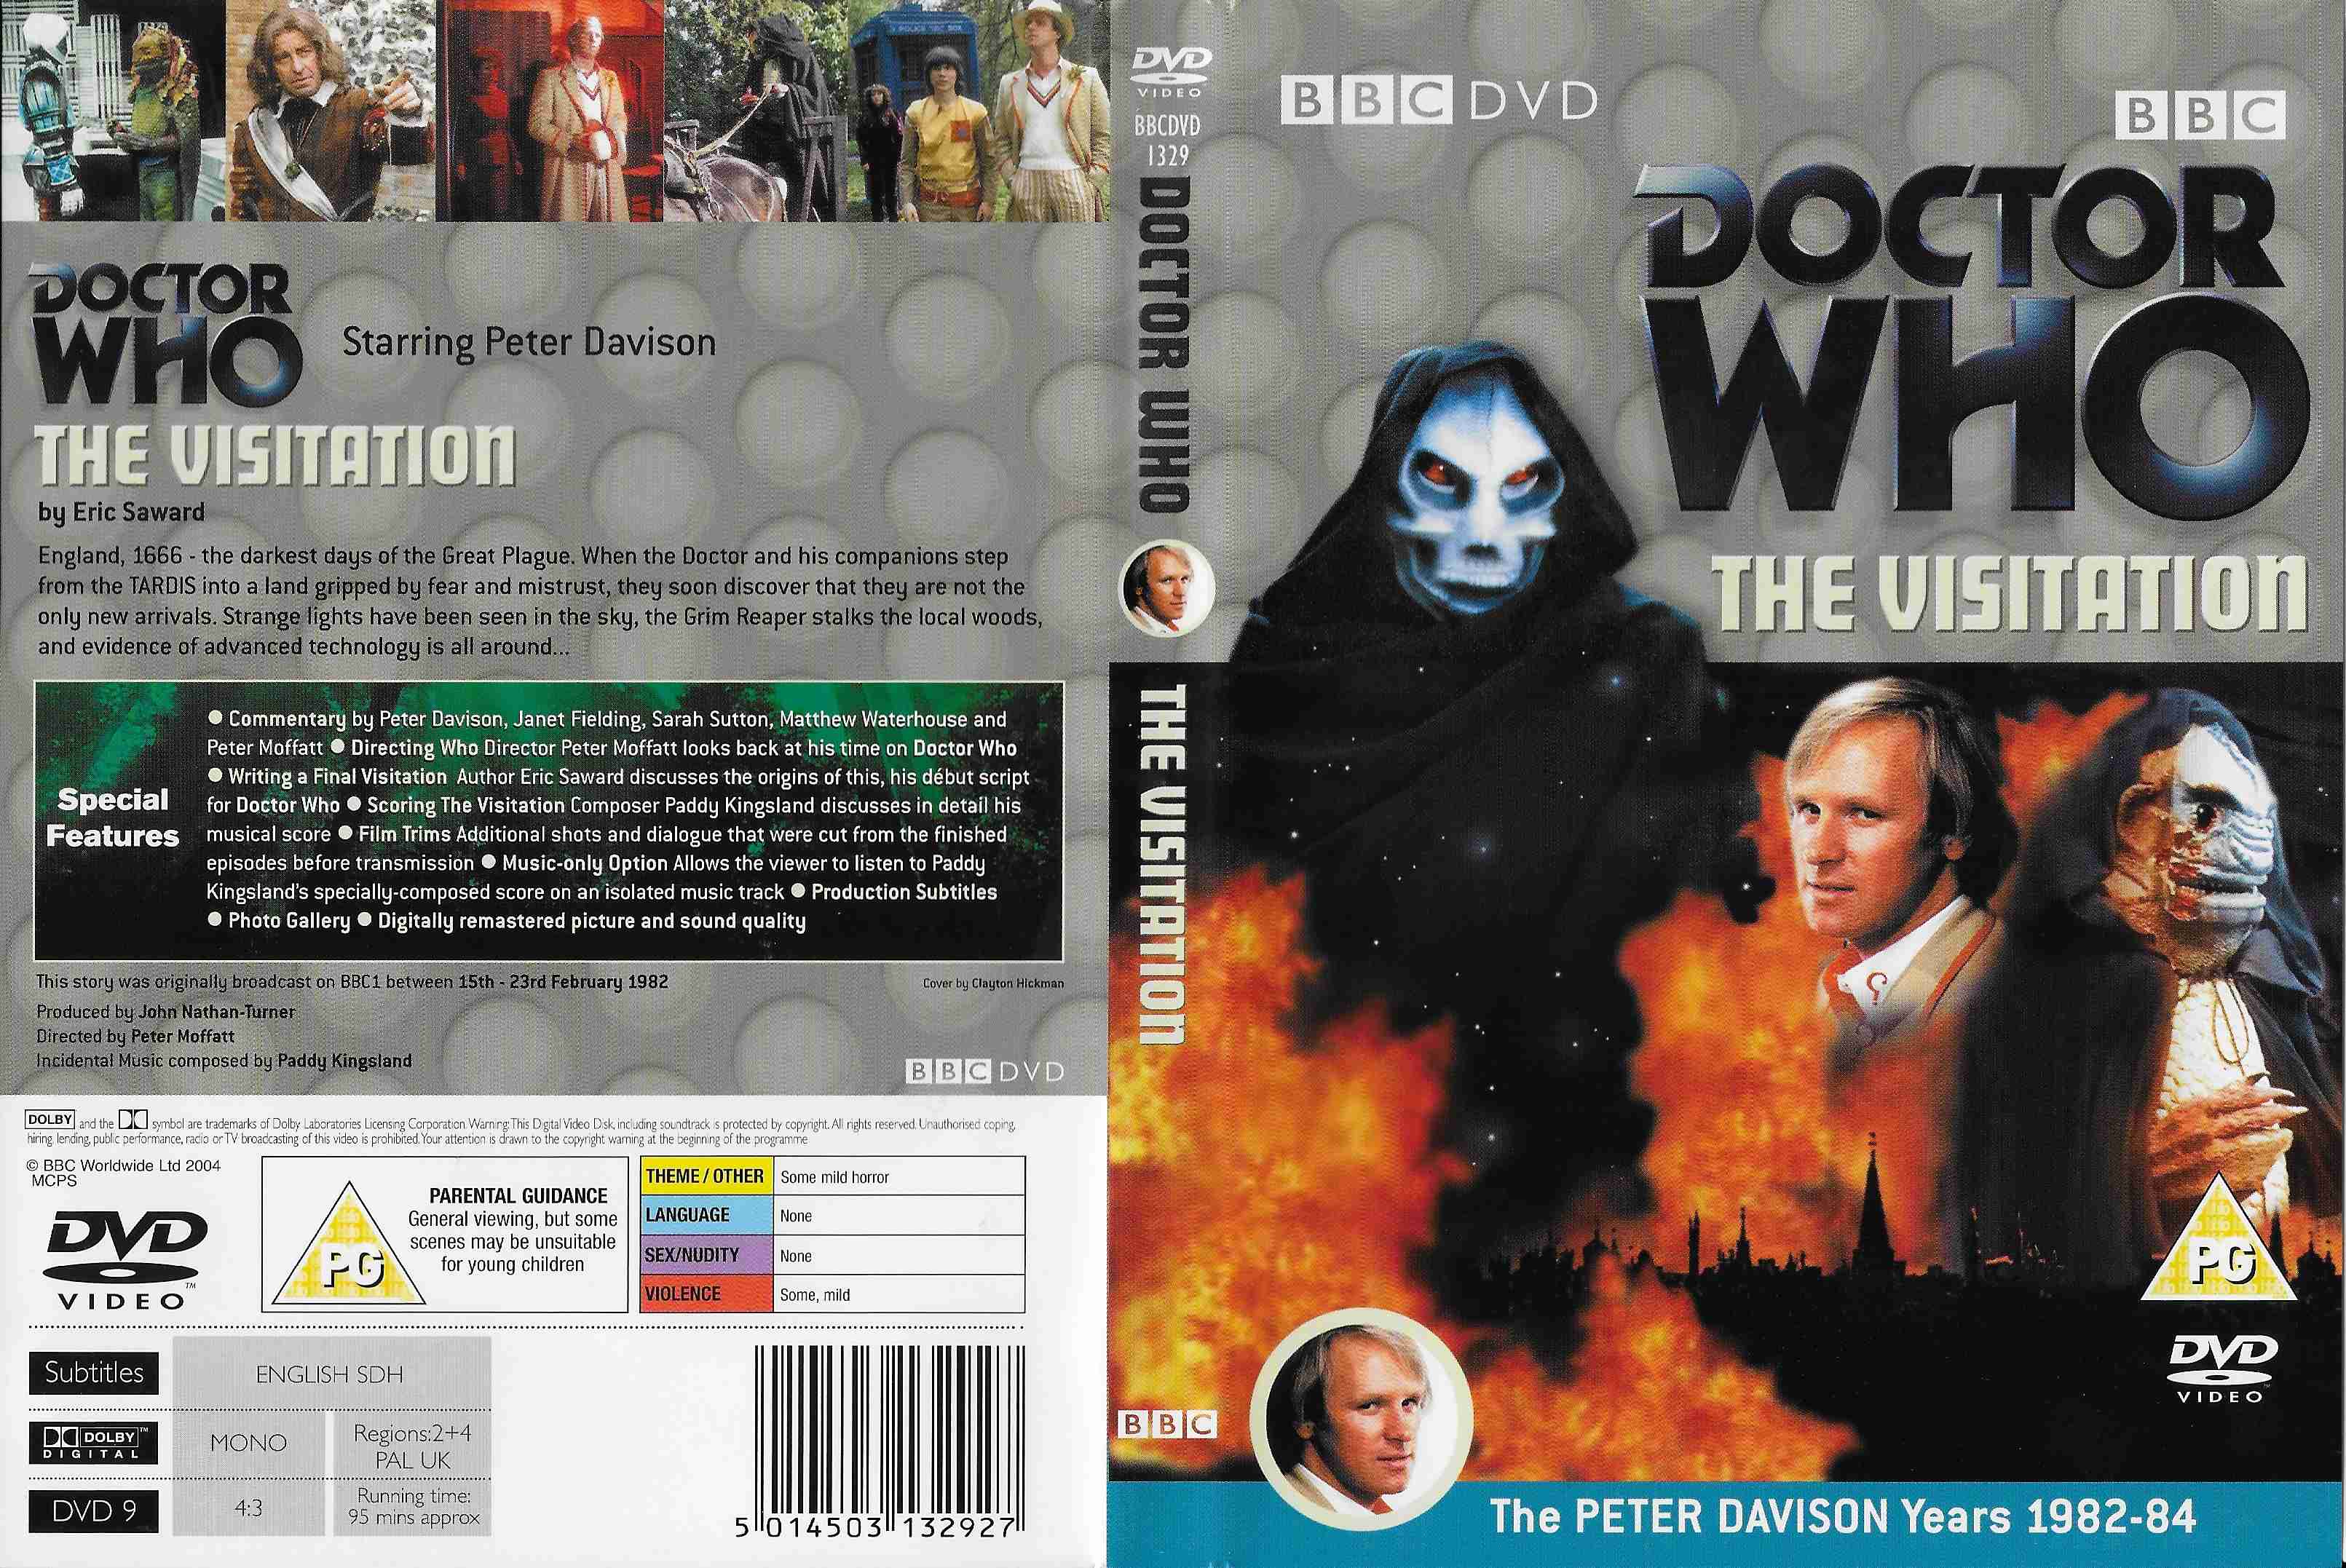 Back cover of BBCDVD 1329